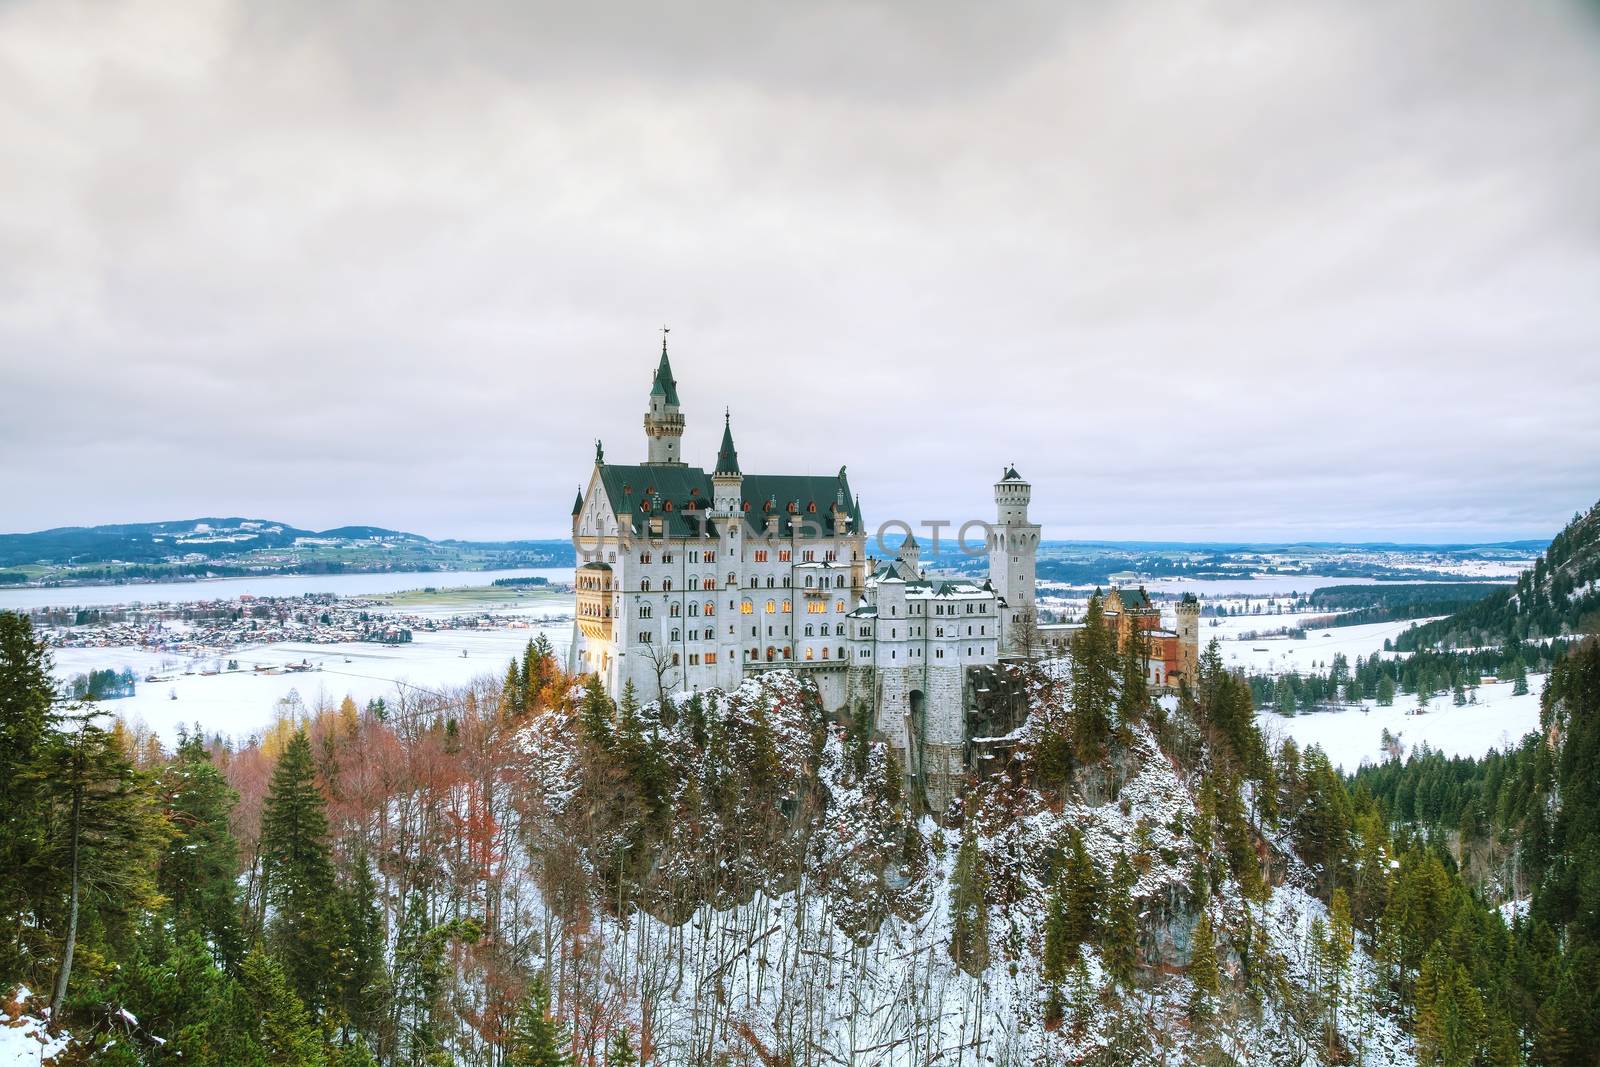 Neuschwanstein castle in Bavaria, Germany at winter time